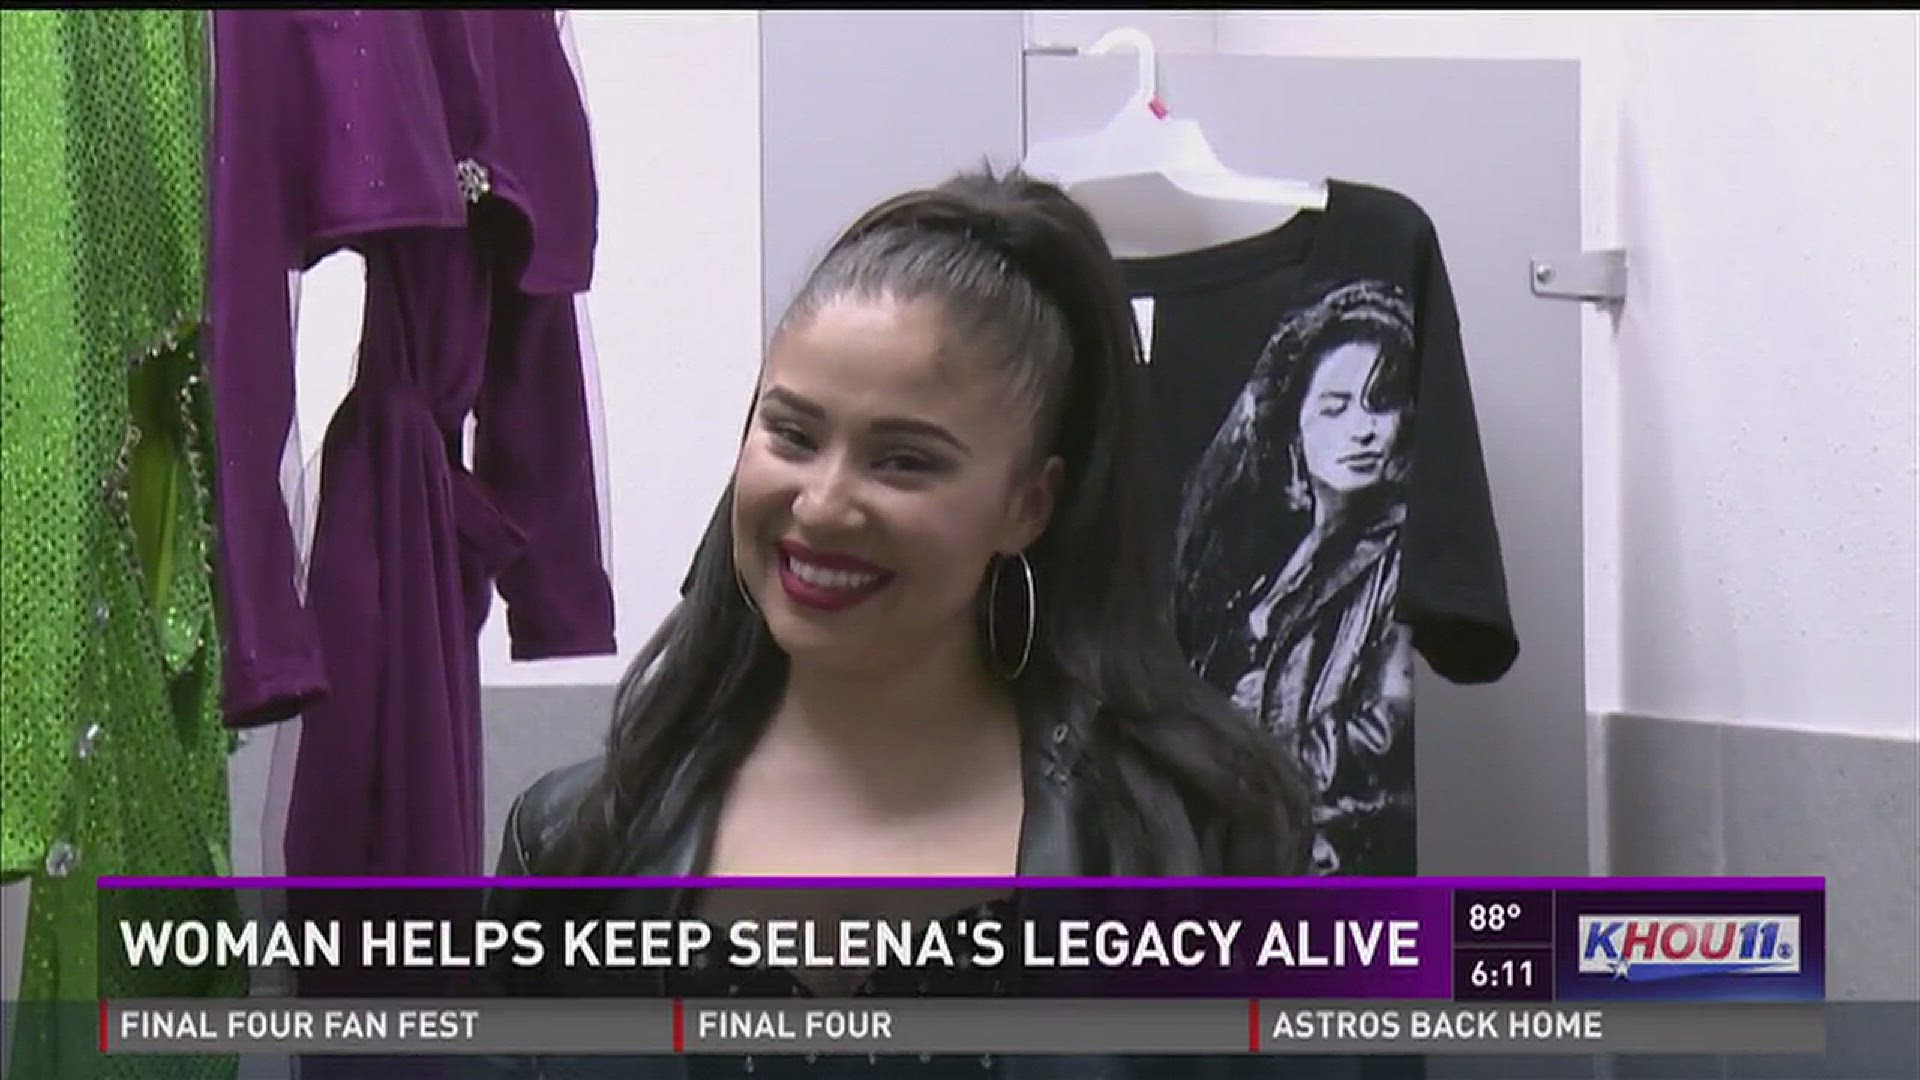 Woman helps keep Selena's legacy alive